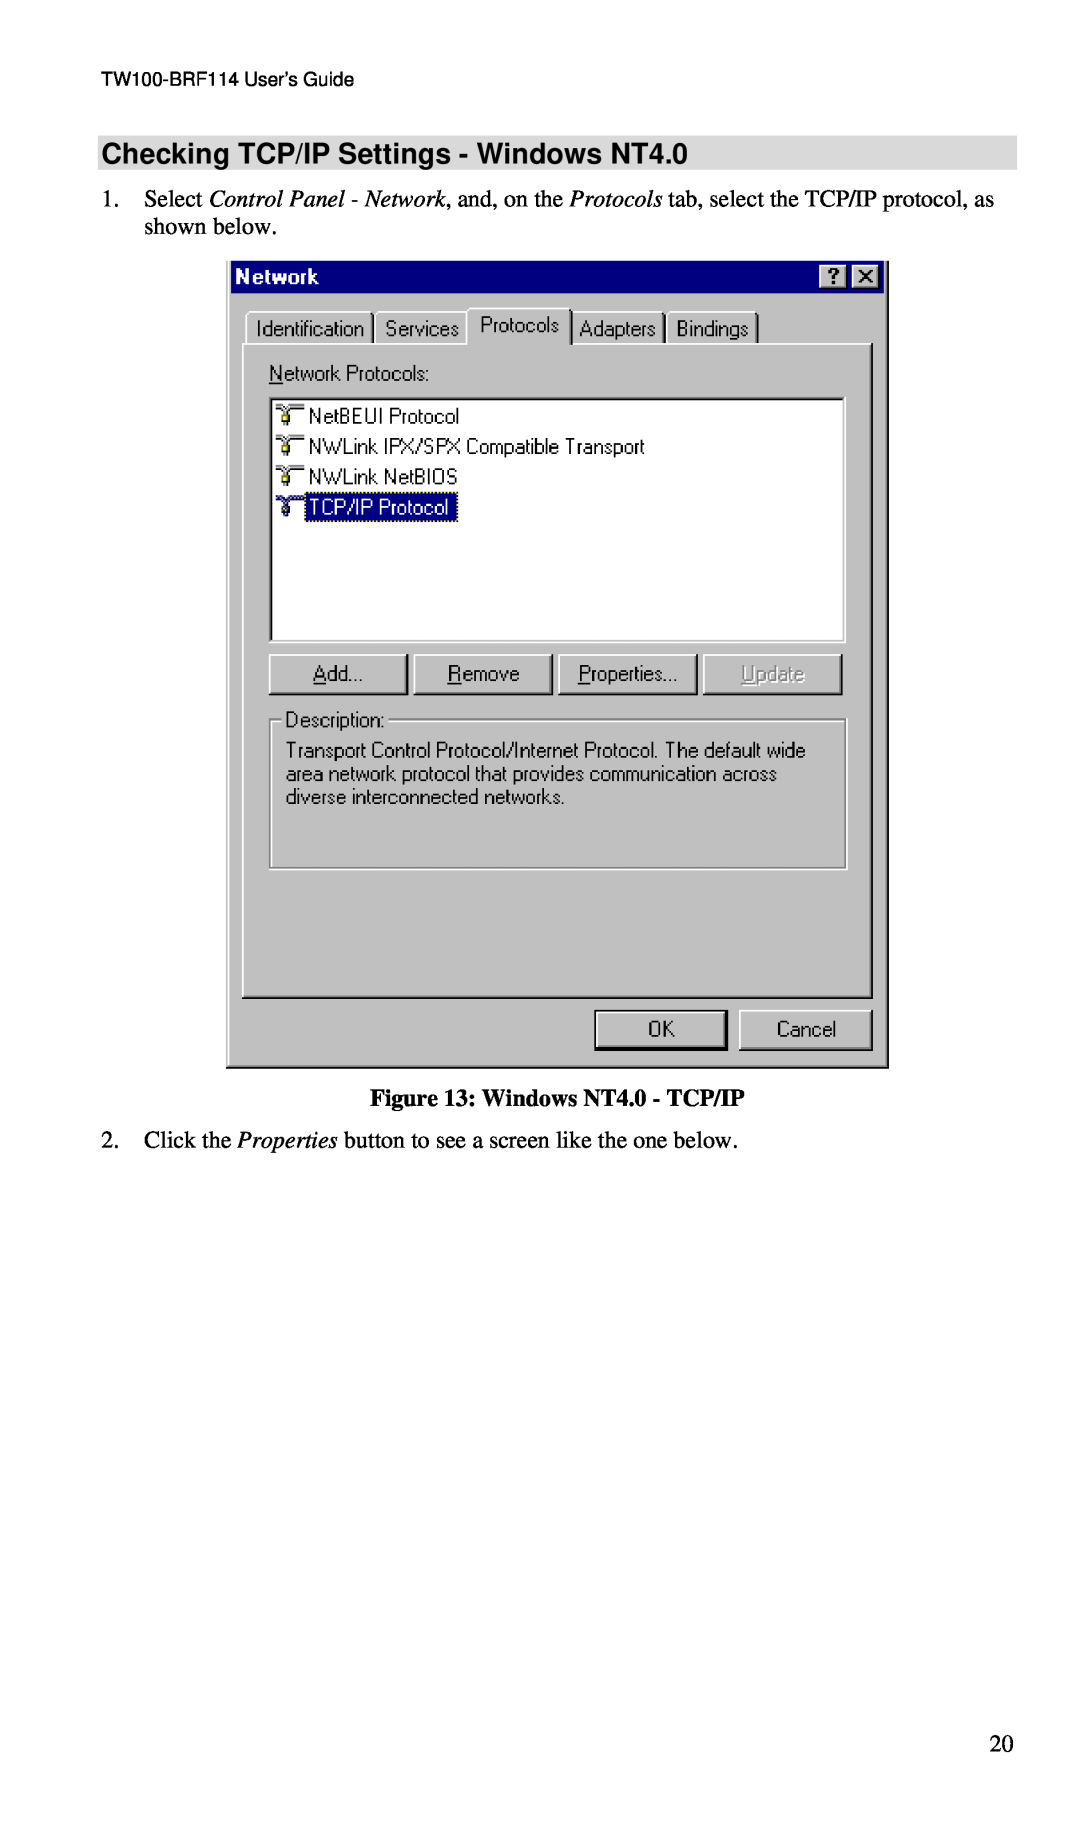 TRENDnet manual Checking TCP/IP Settings - Windows NT4.0, Windows NT4.0 - TCP/IP, TW100-BRF114 User’s Guide 